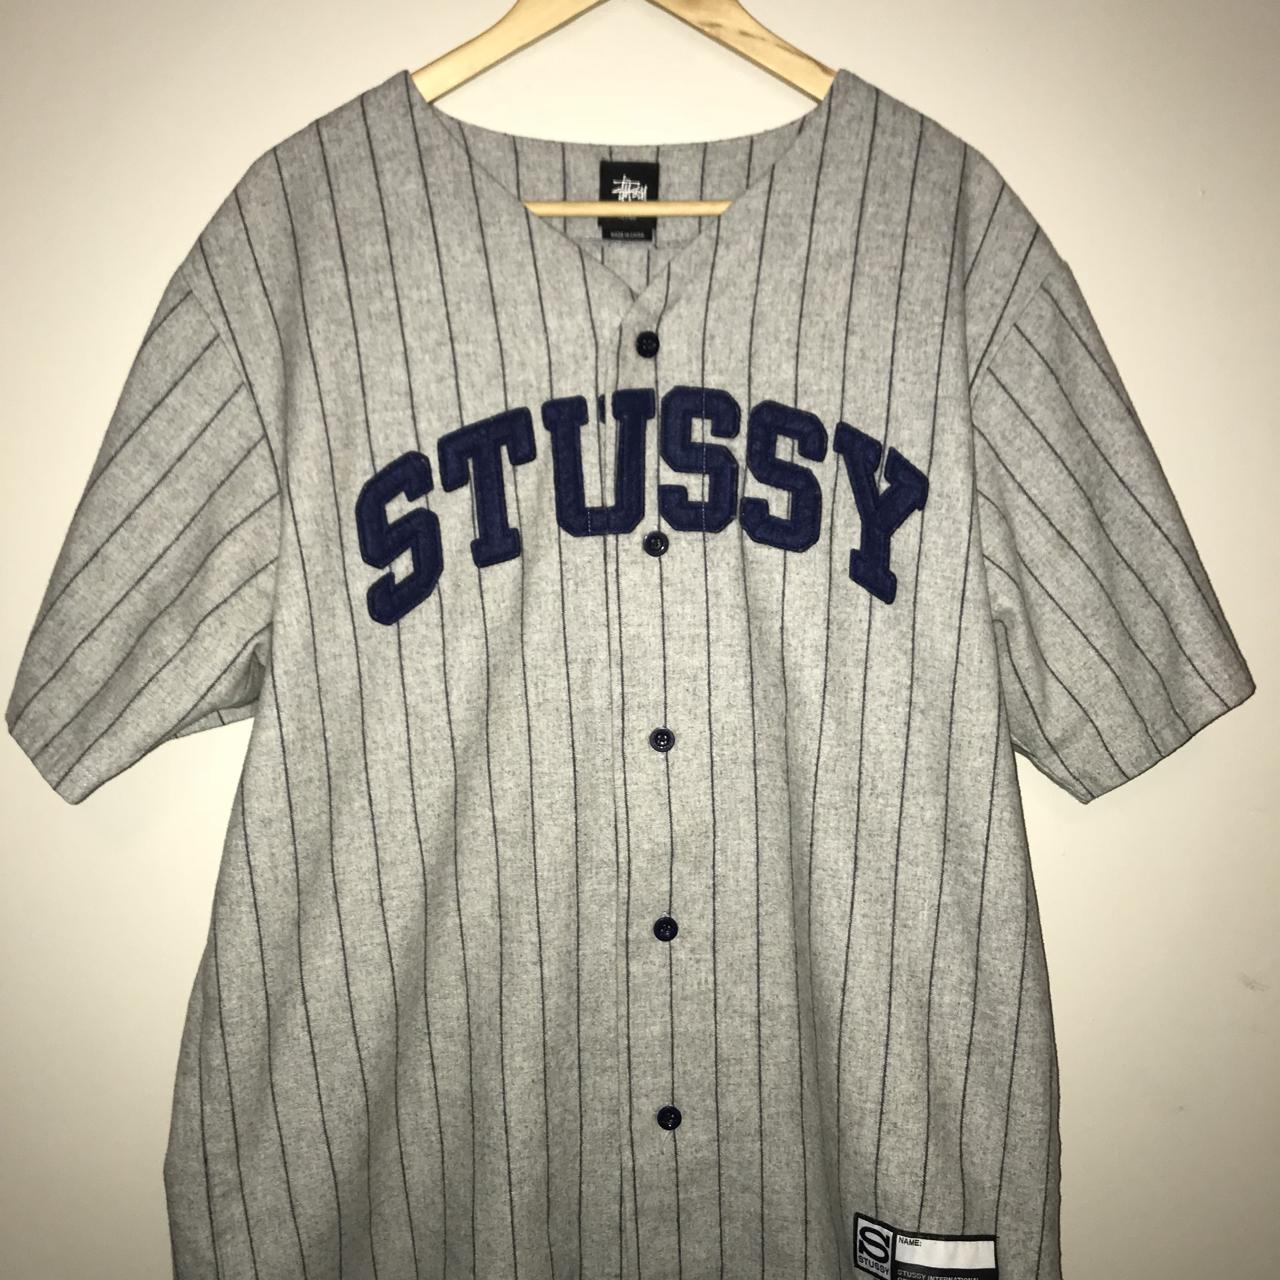 Pinstripe Stussy Baseball Jersey made from wool - Depop